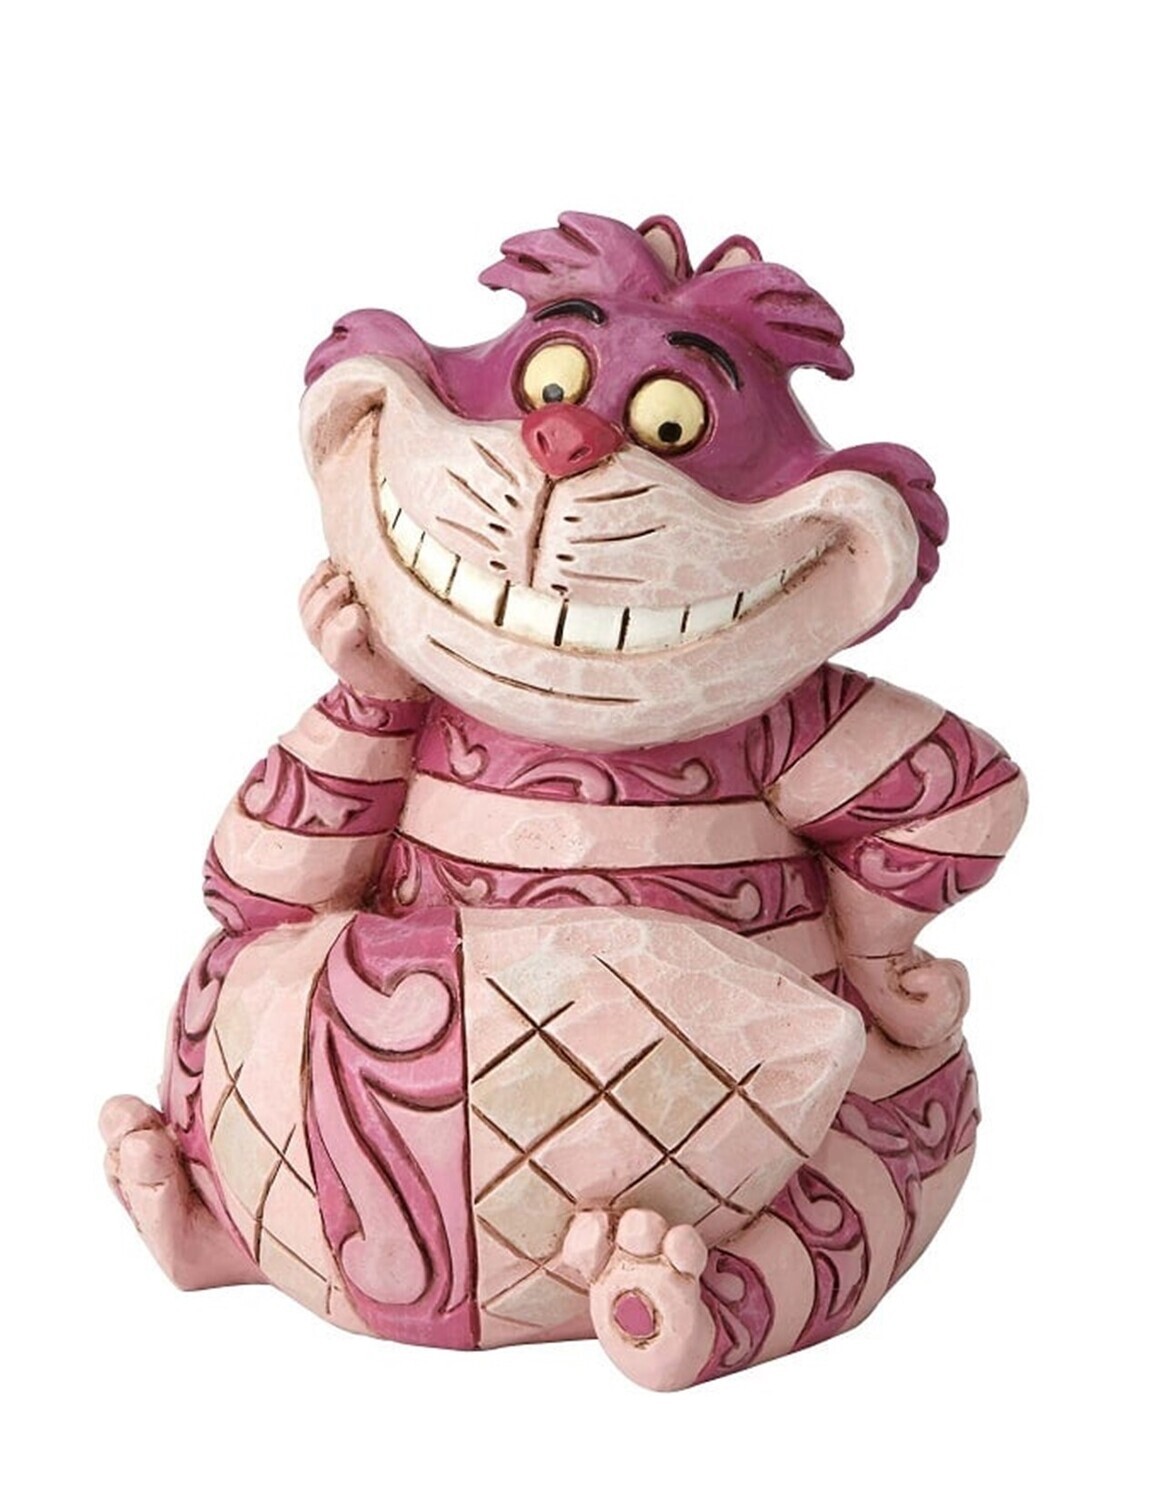 Jim Shore Disney Traditions "Cheshire Cat" Mini Figurine (4056745)